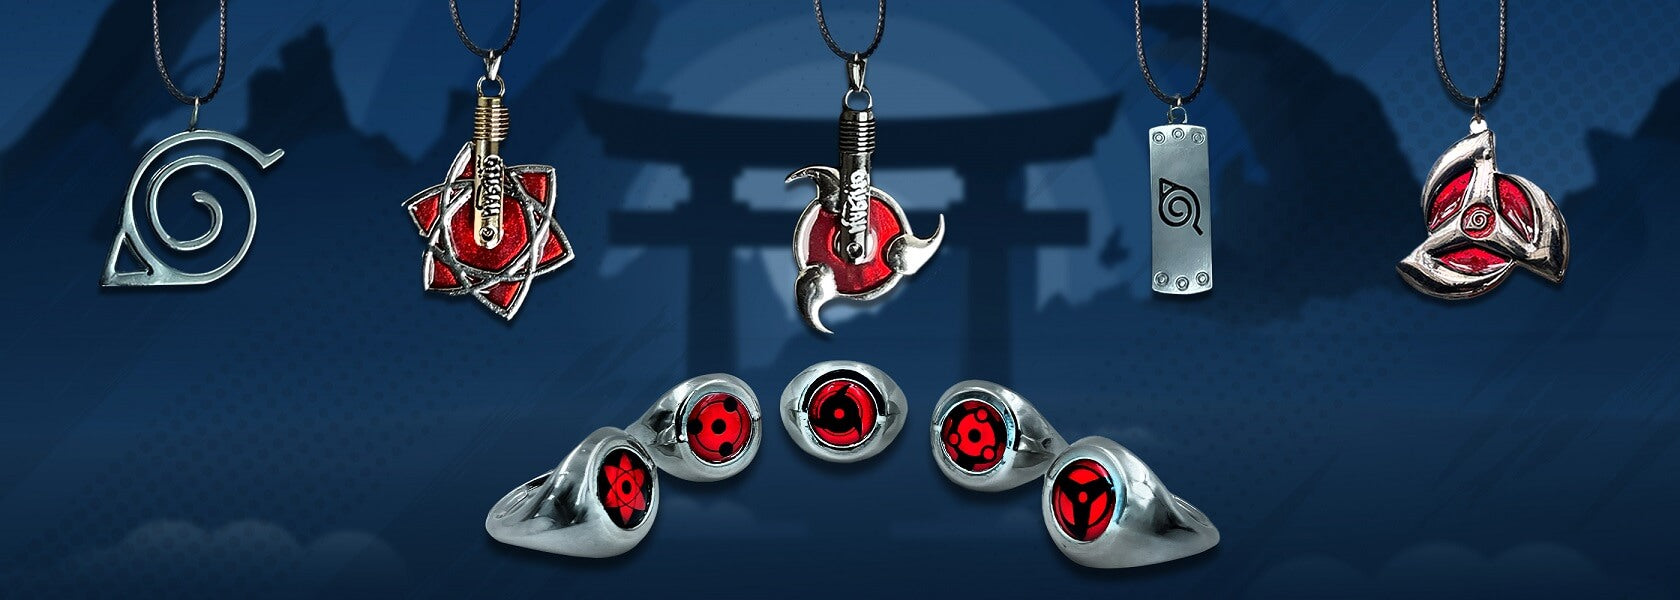 animemart jewellery desktop banner